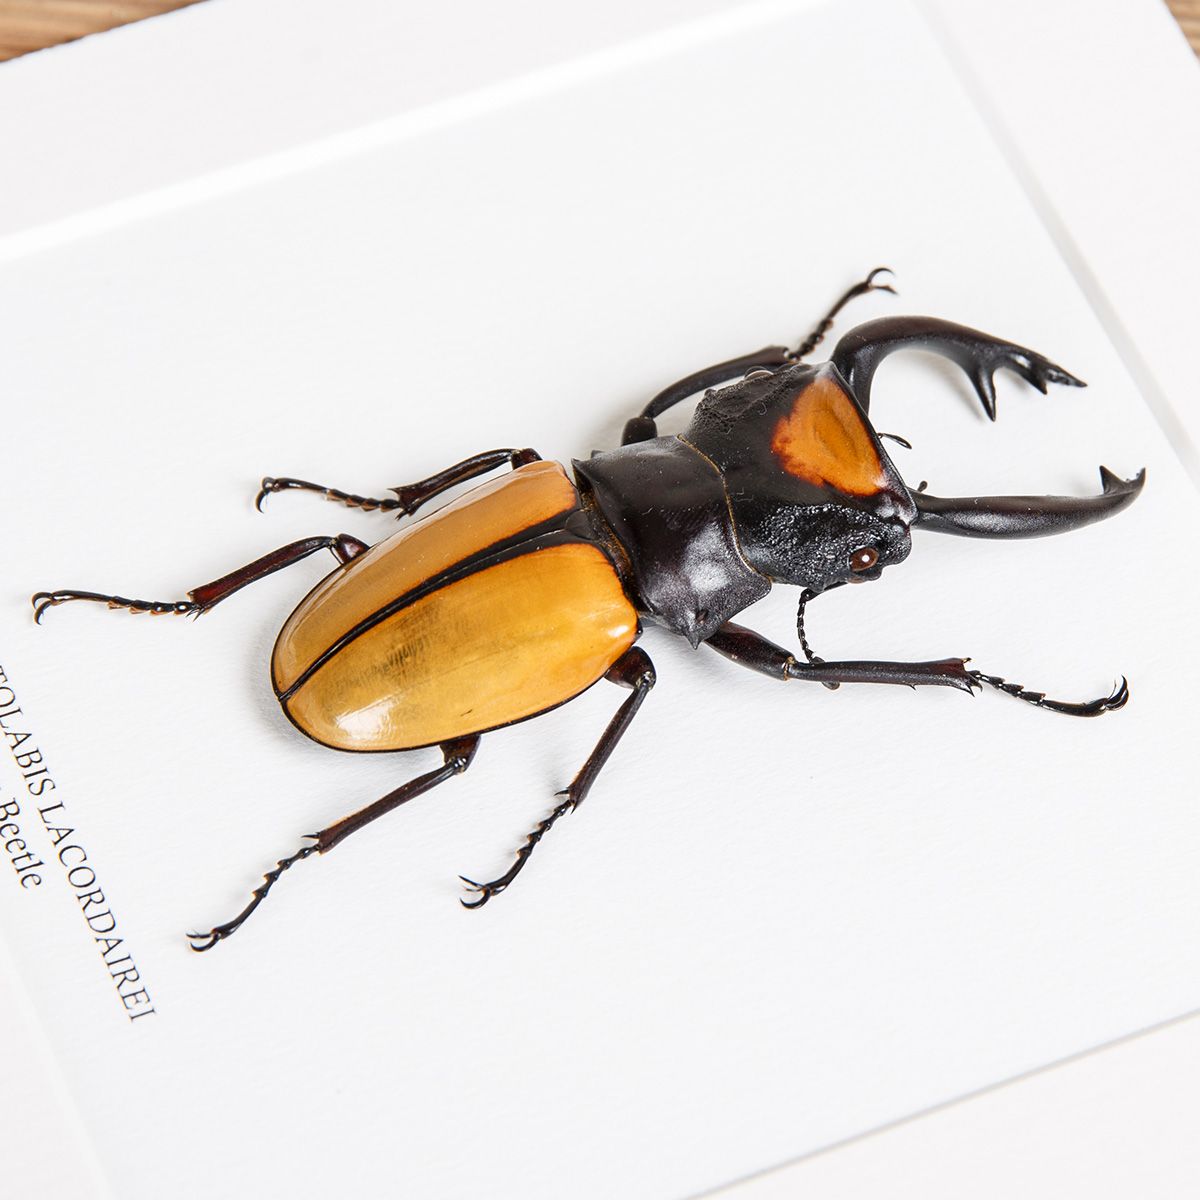 Stag Beetle in Box Frame (Odontolabis lacordairei)